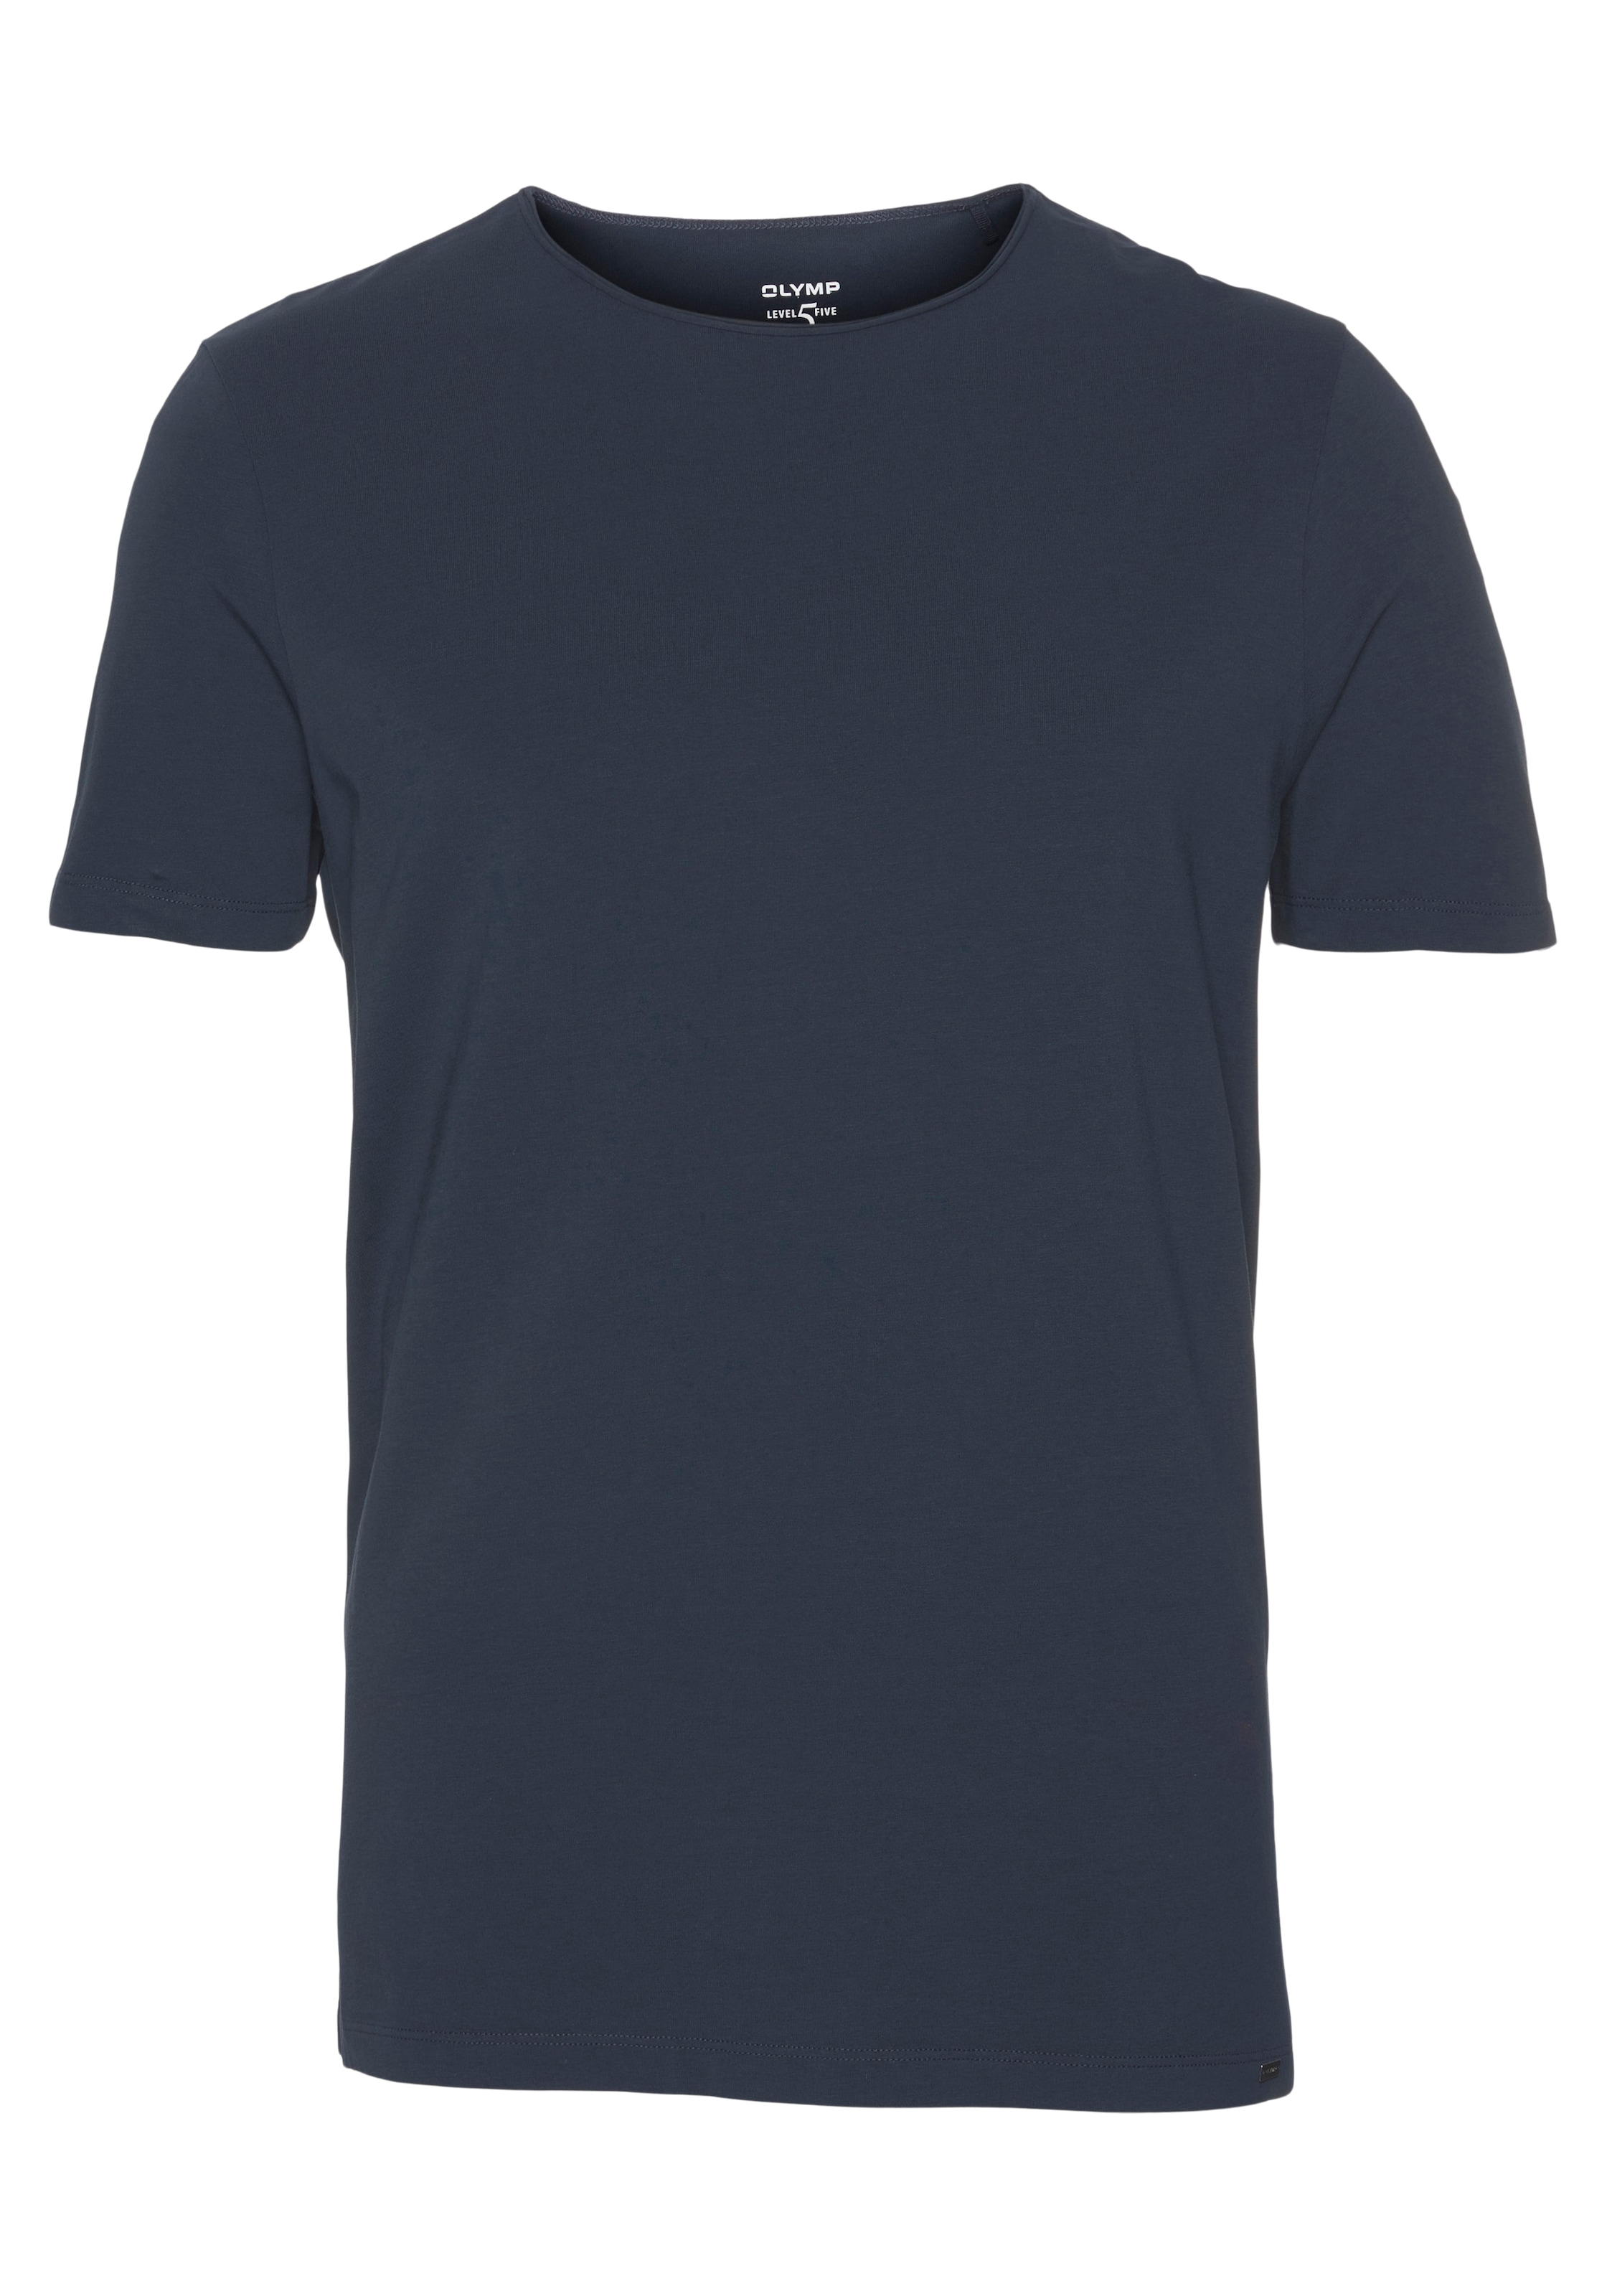 OLYMP T-Shirt bei feinem body »Level OTTO fit«, bestellen aus Five Jersey online